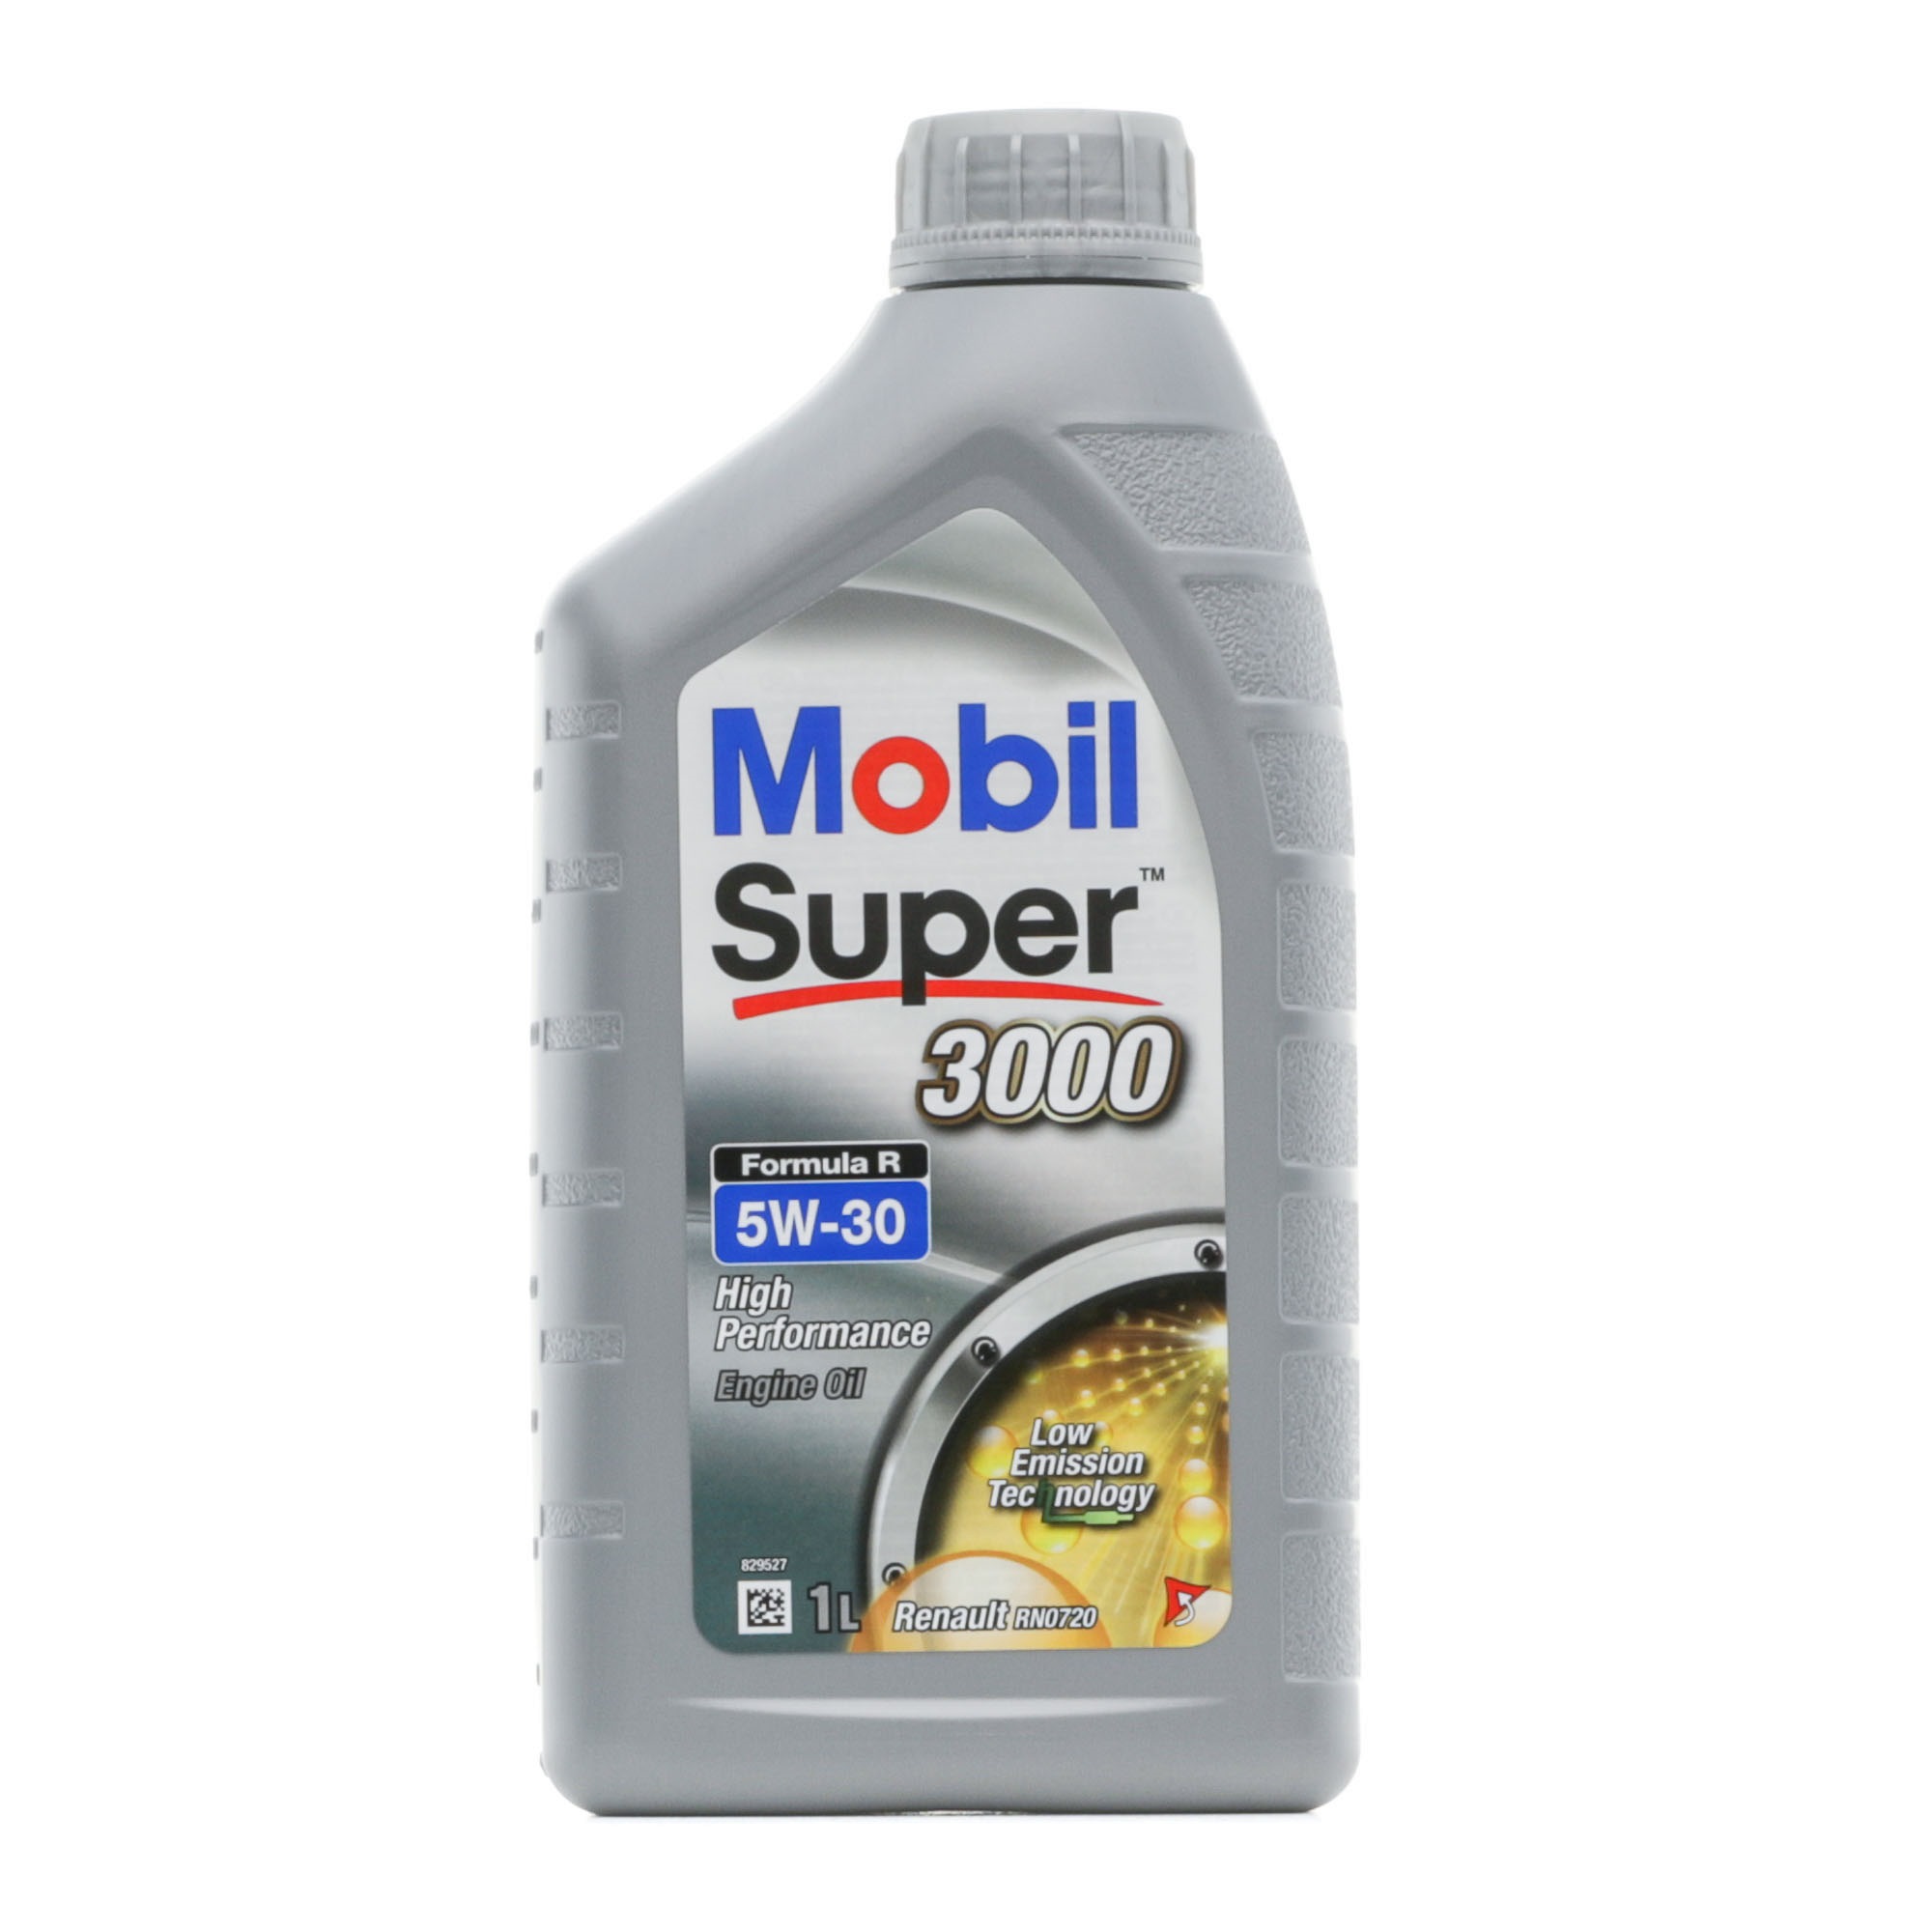 MOBIL Super, 3000 Formula R 150886 Engine oil 5W-30, 1l, Synthetic Oil